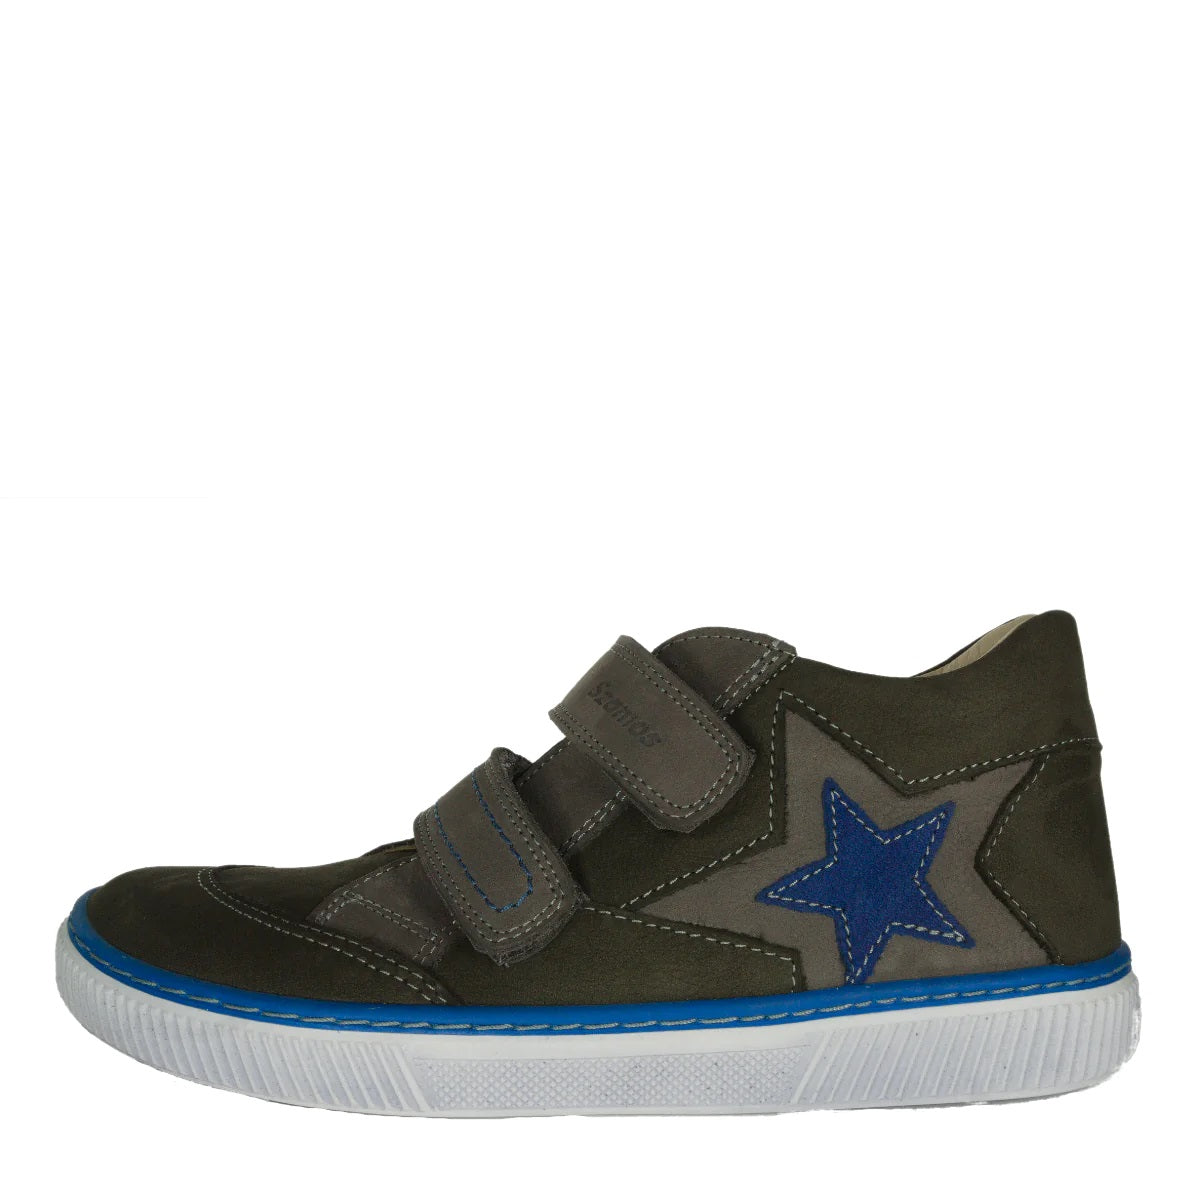 Szamos kid boy sneakers khaki with brown velcro straps and blue star decor big kid size